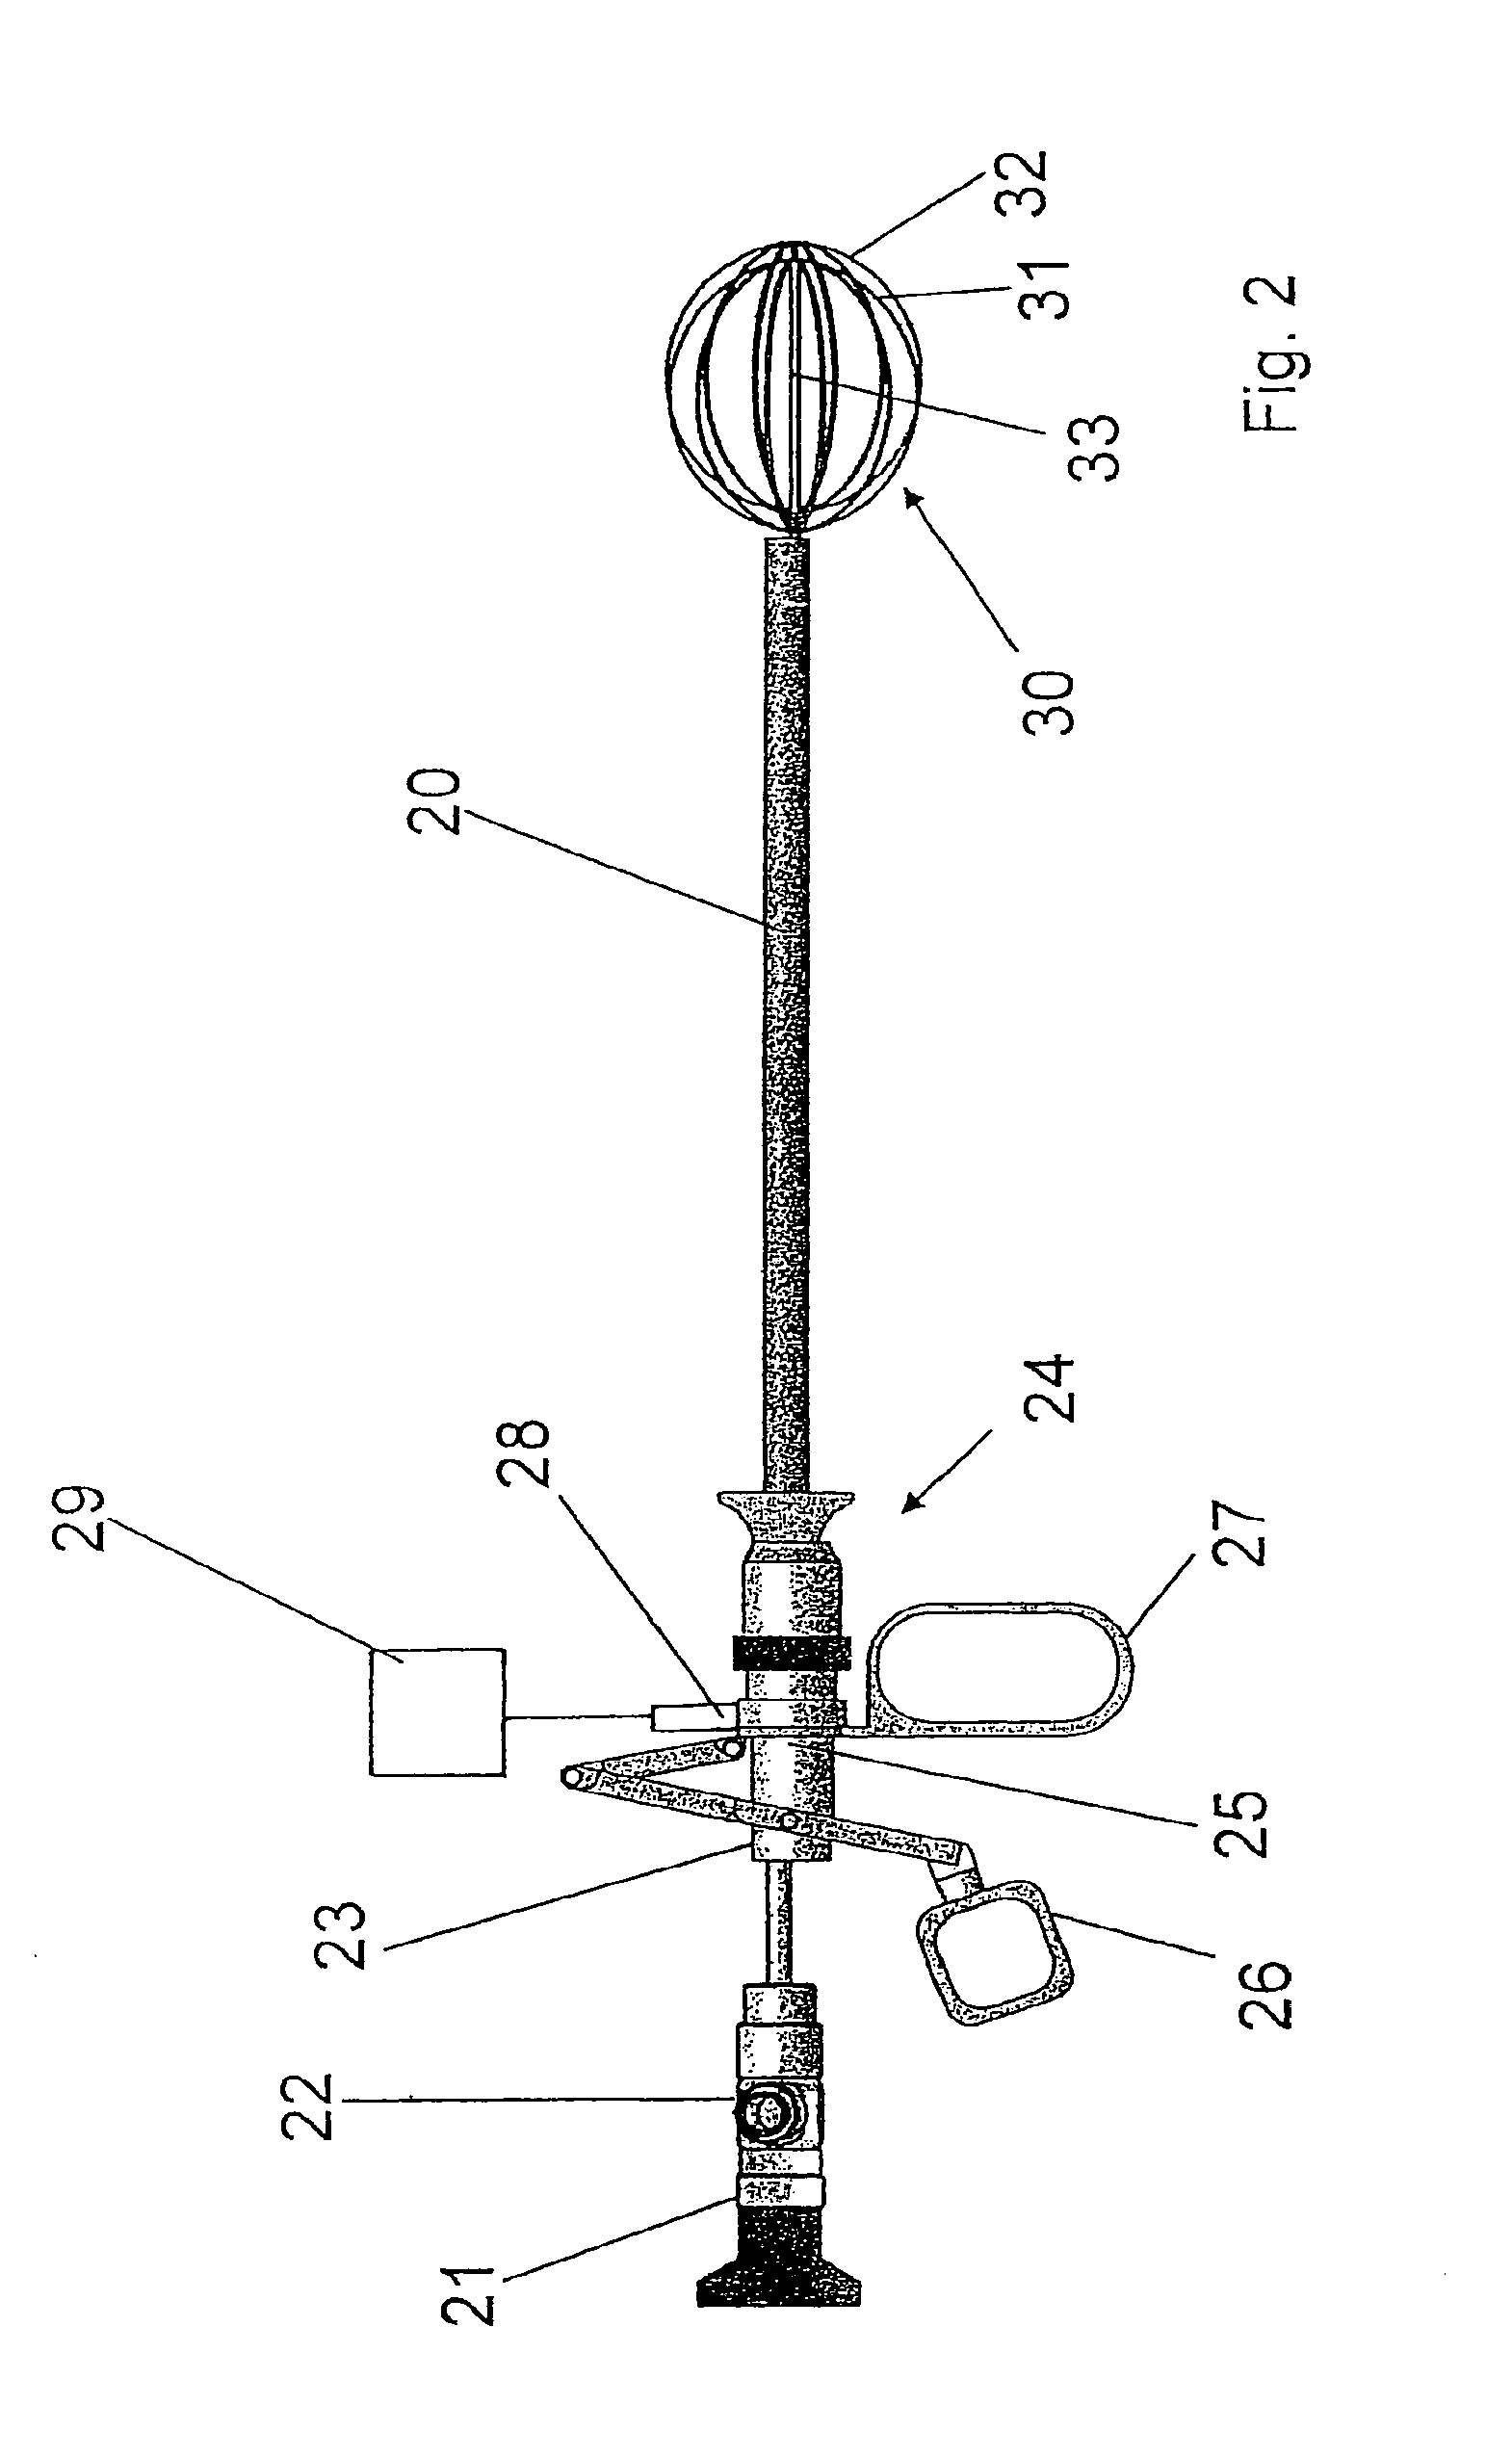 Electrode arrangement